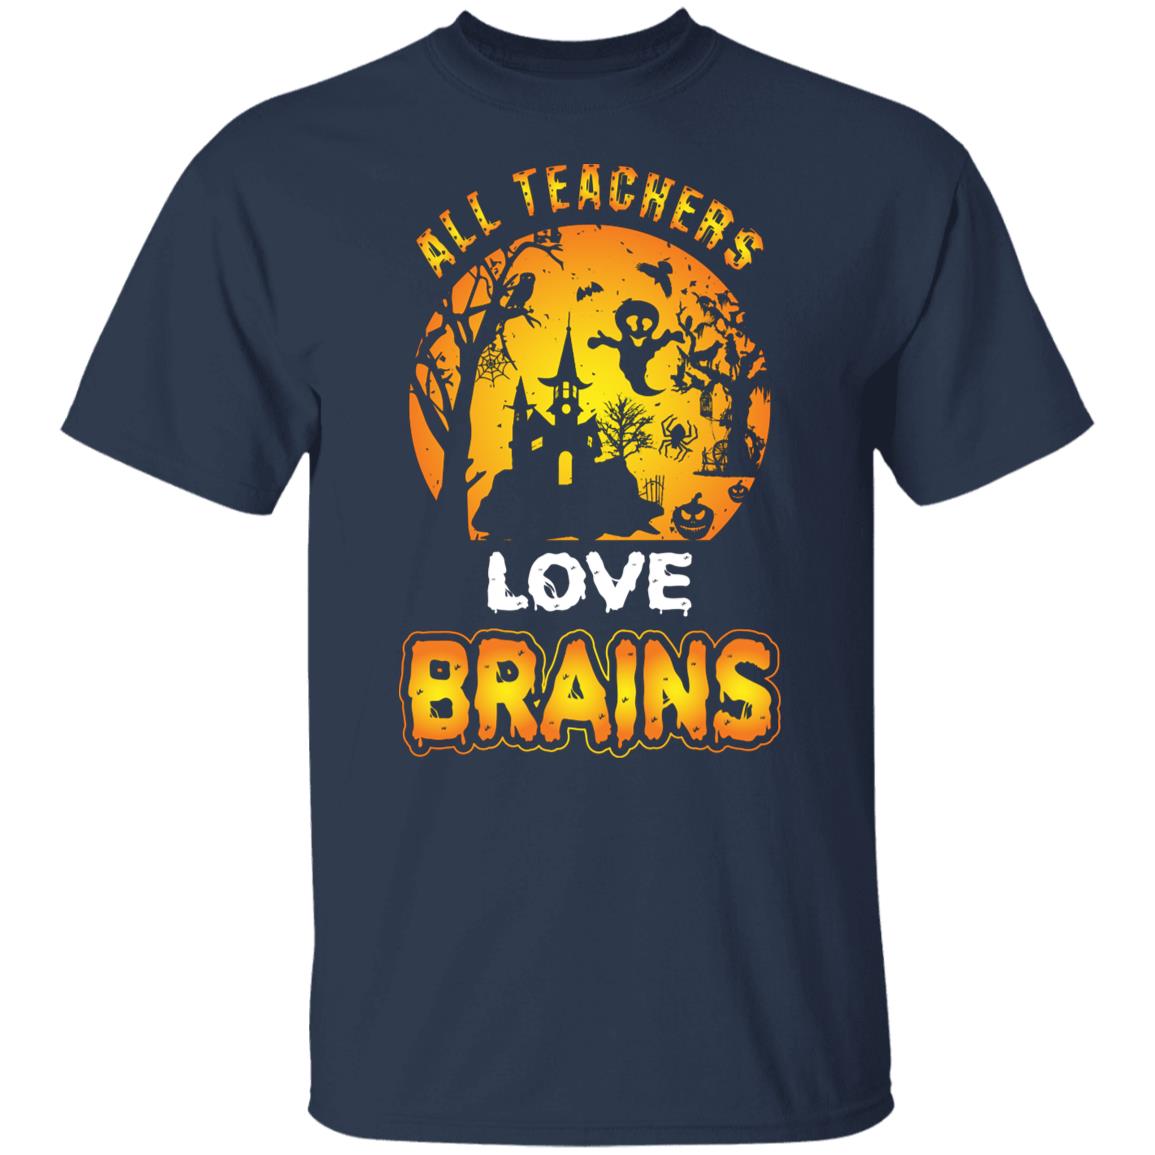 All Teachers Love Brains Shirt